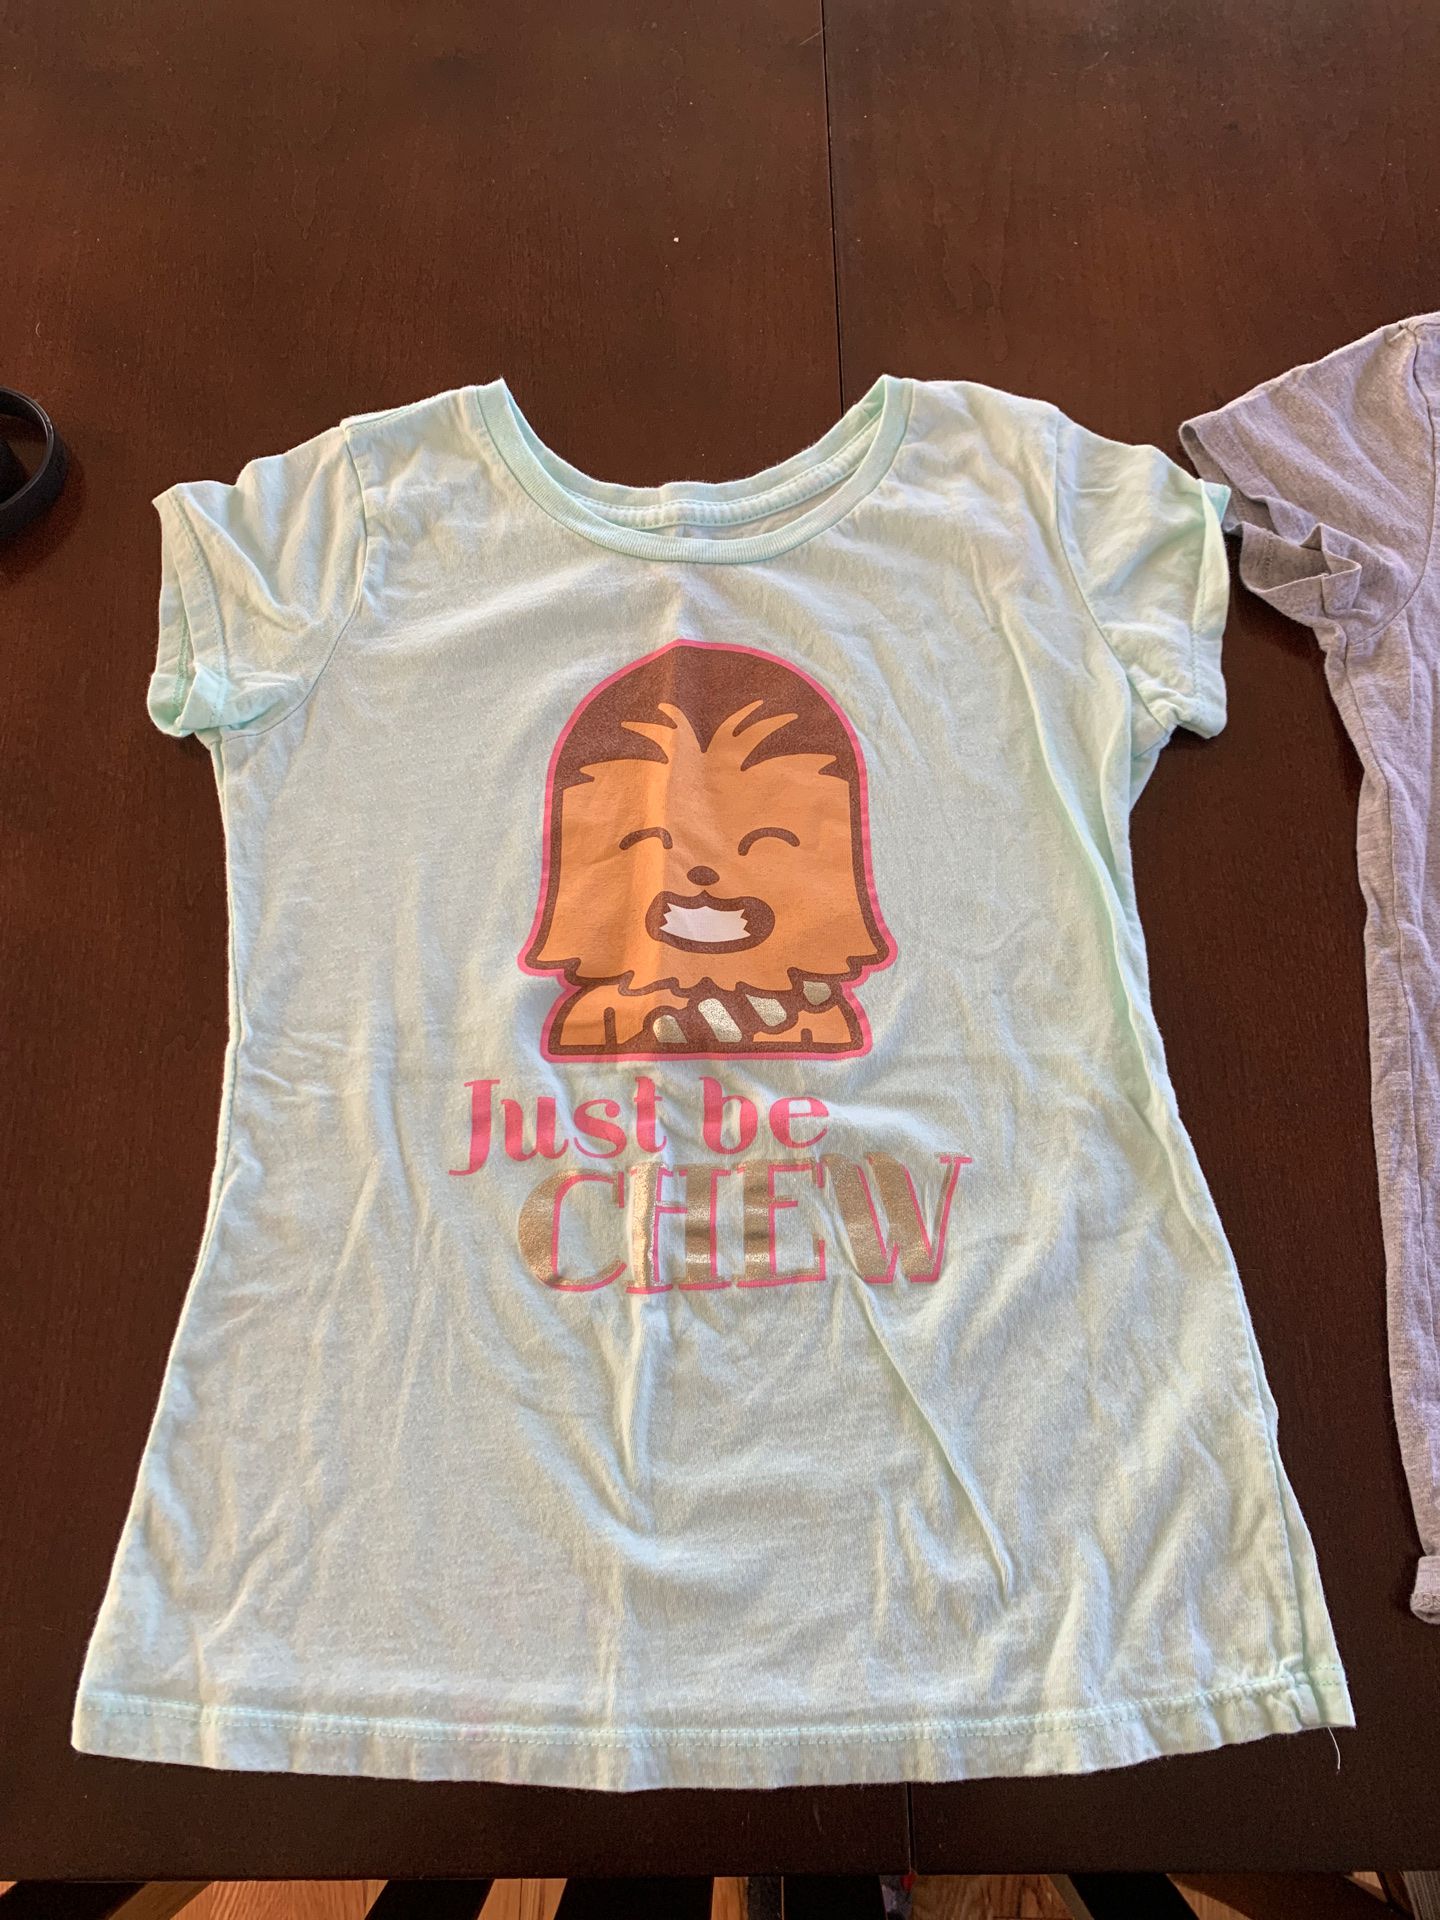 Star Wars shirts for girls